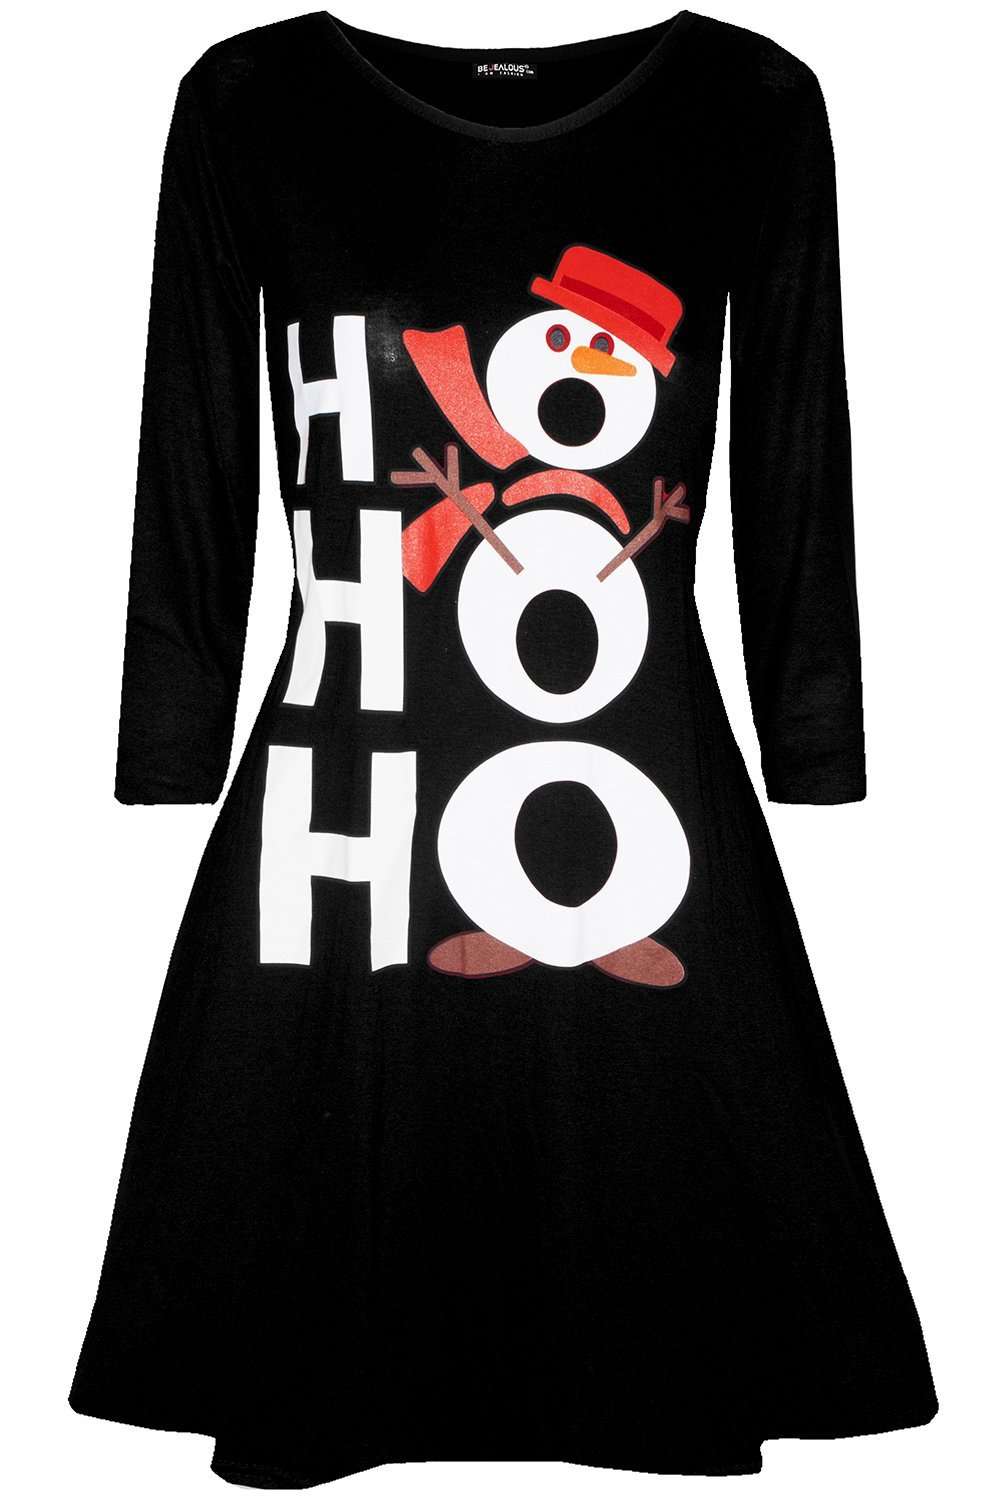 Long Sleeve Hohoho Snowman Print Swing Dress - bejealous-com